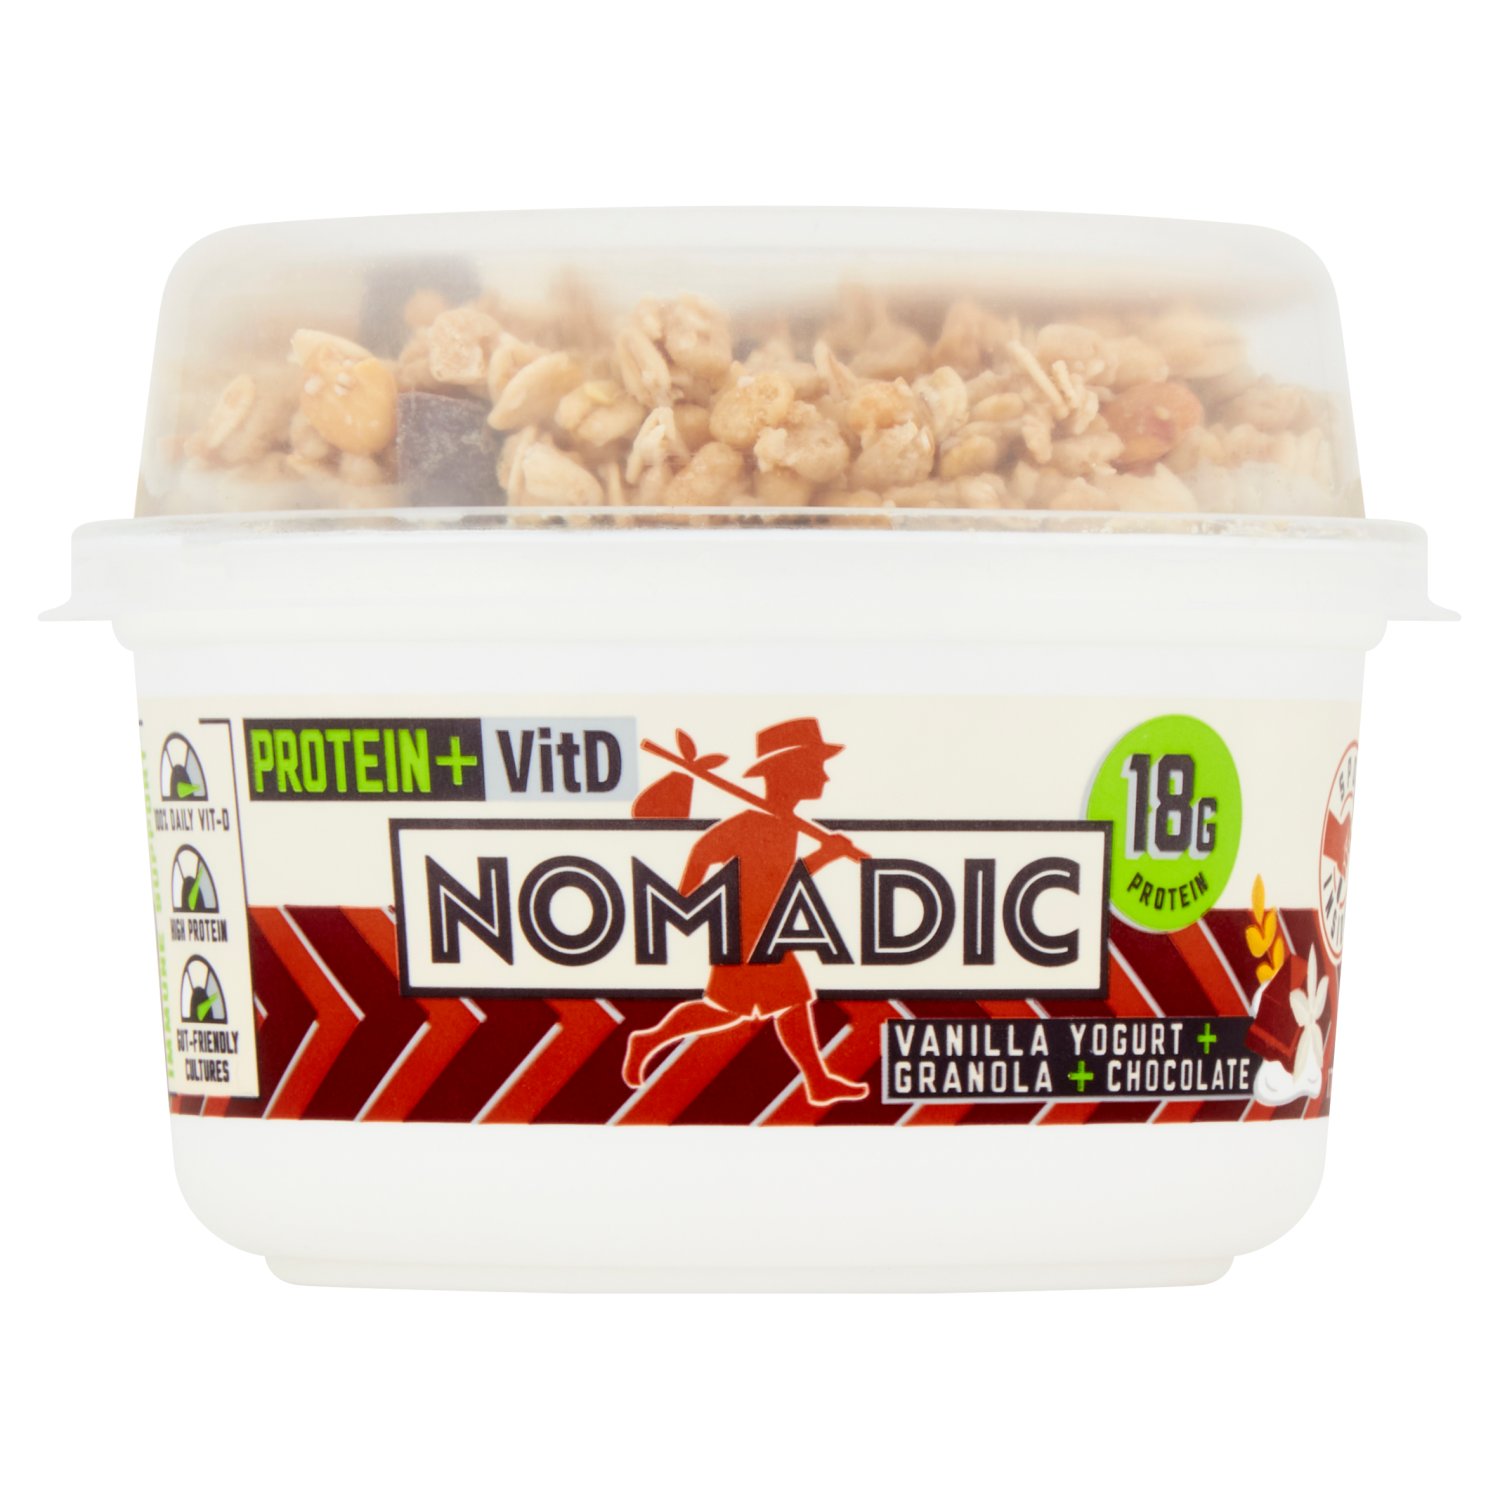 Nomadic Protein & Vit D Vanilla Yogurt With Granola, Dark Choc Chunks (170 g)